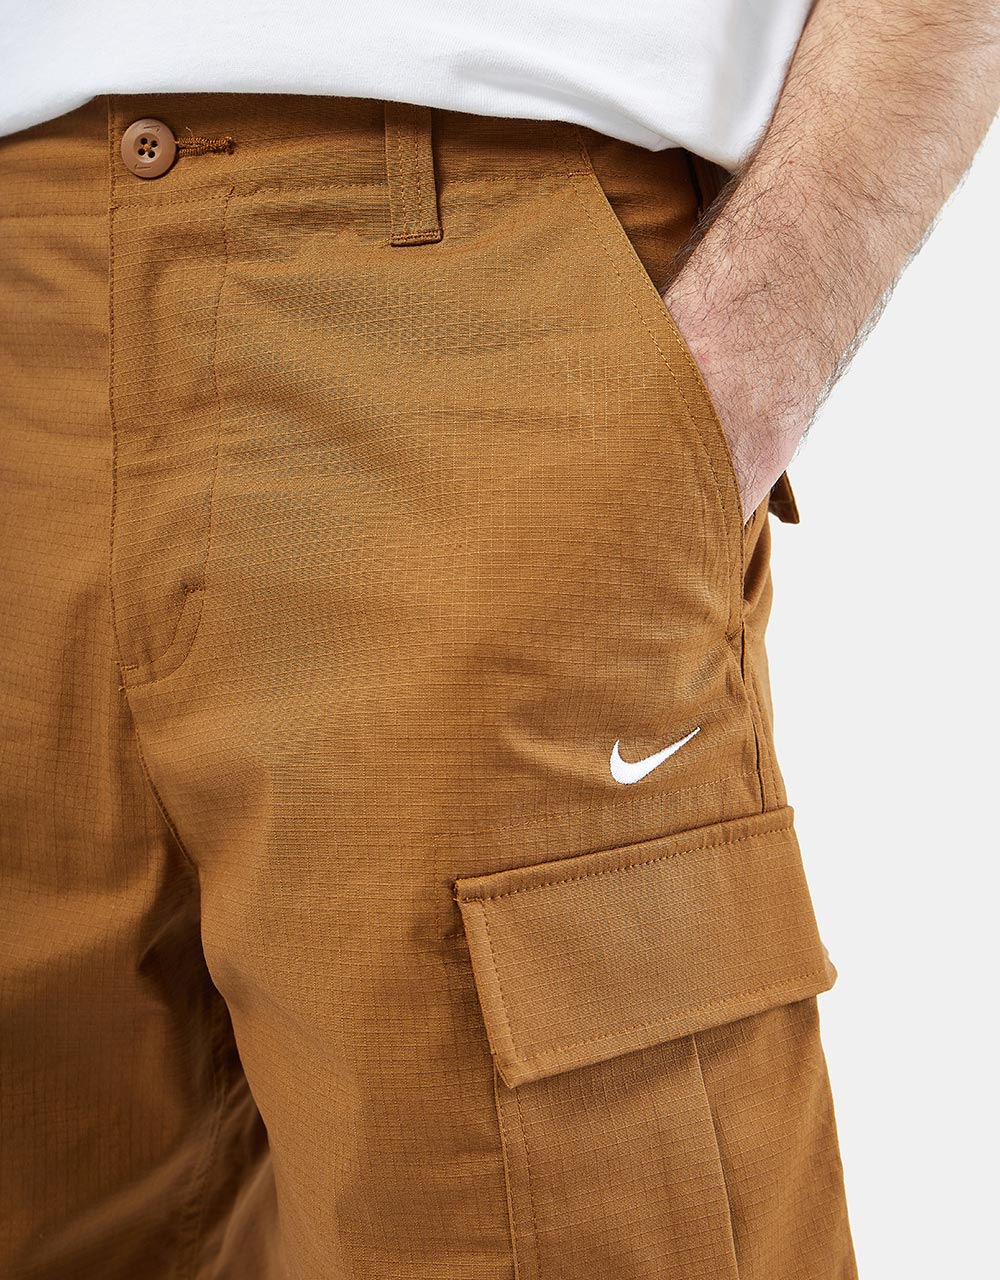 Nike SB Kearny Cargo Short - Ale Brown/White